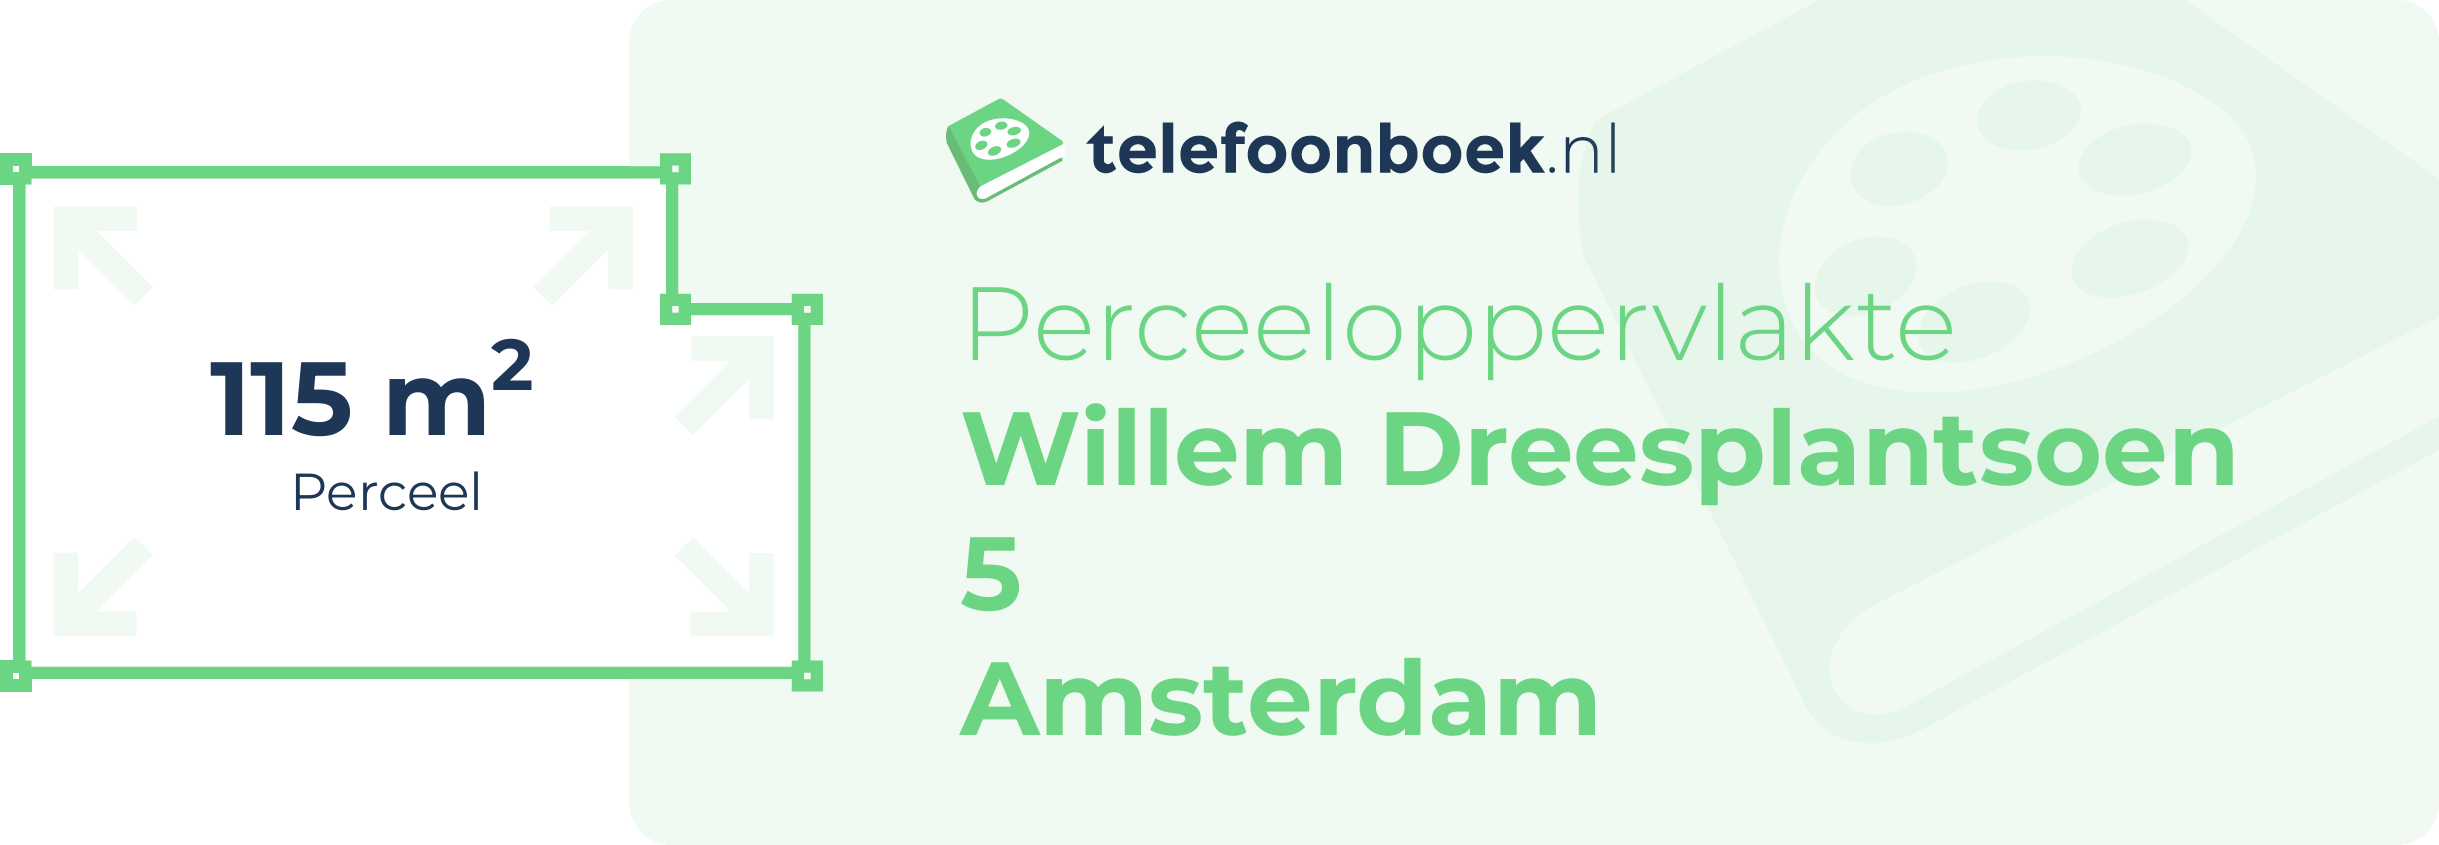 Perceeloppervlakte Willem Dreesplantsoen 5 Amsterdam